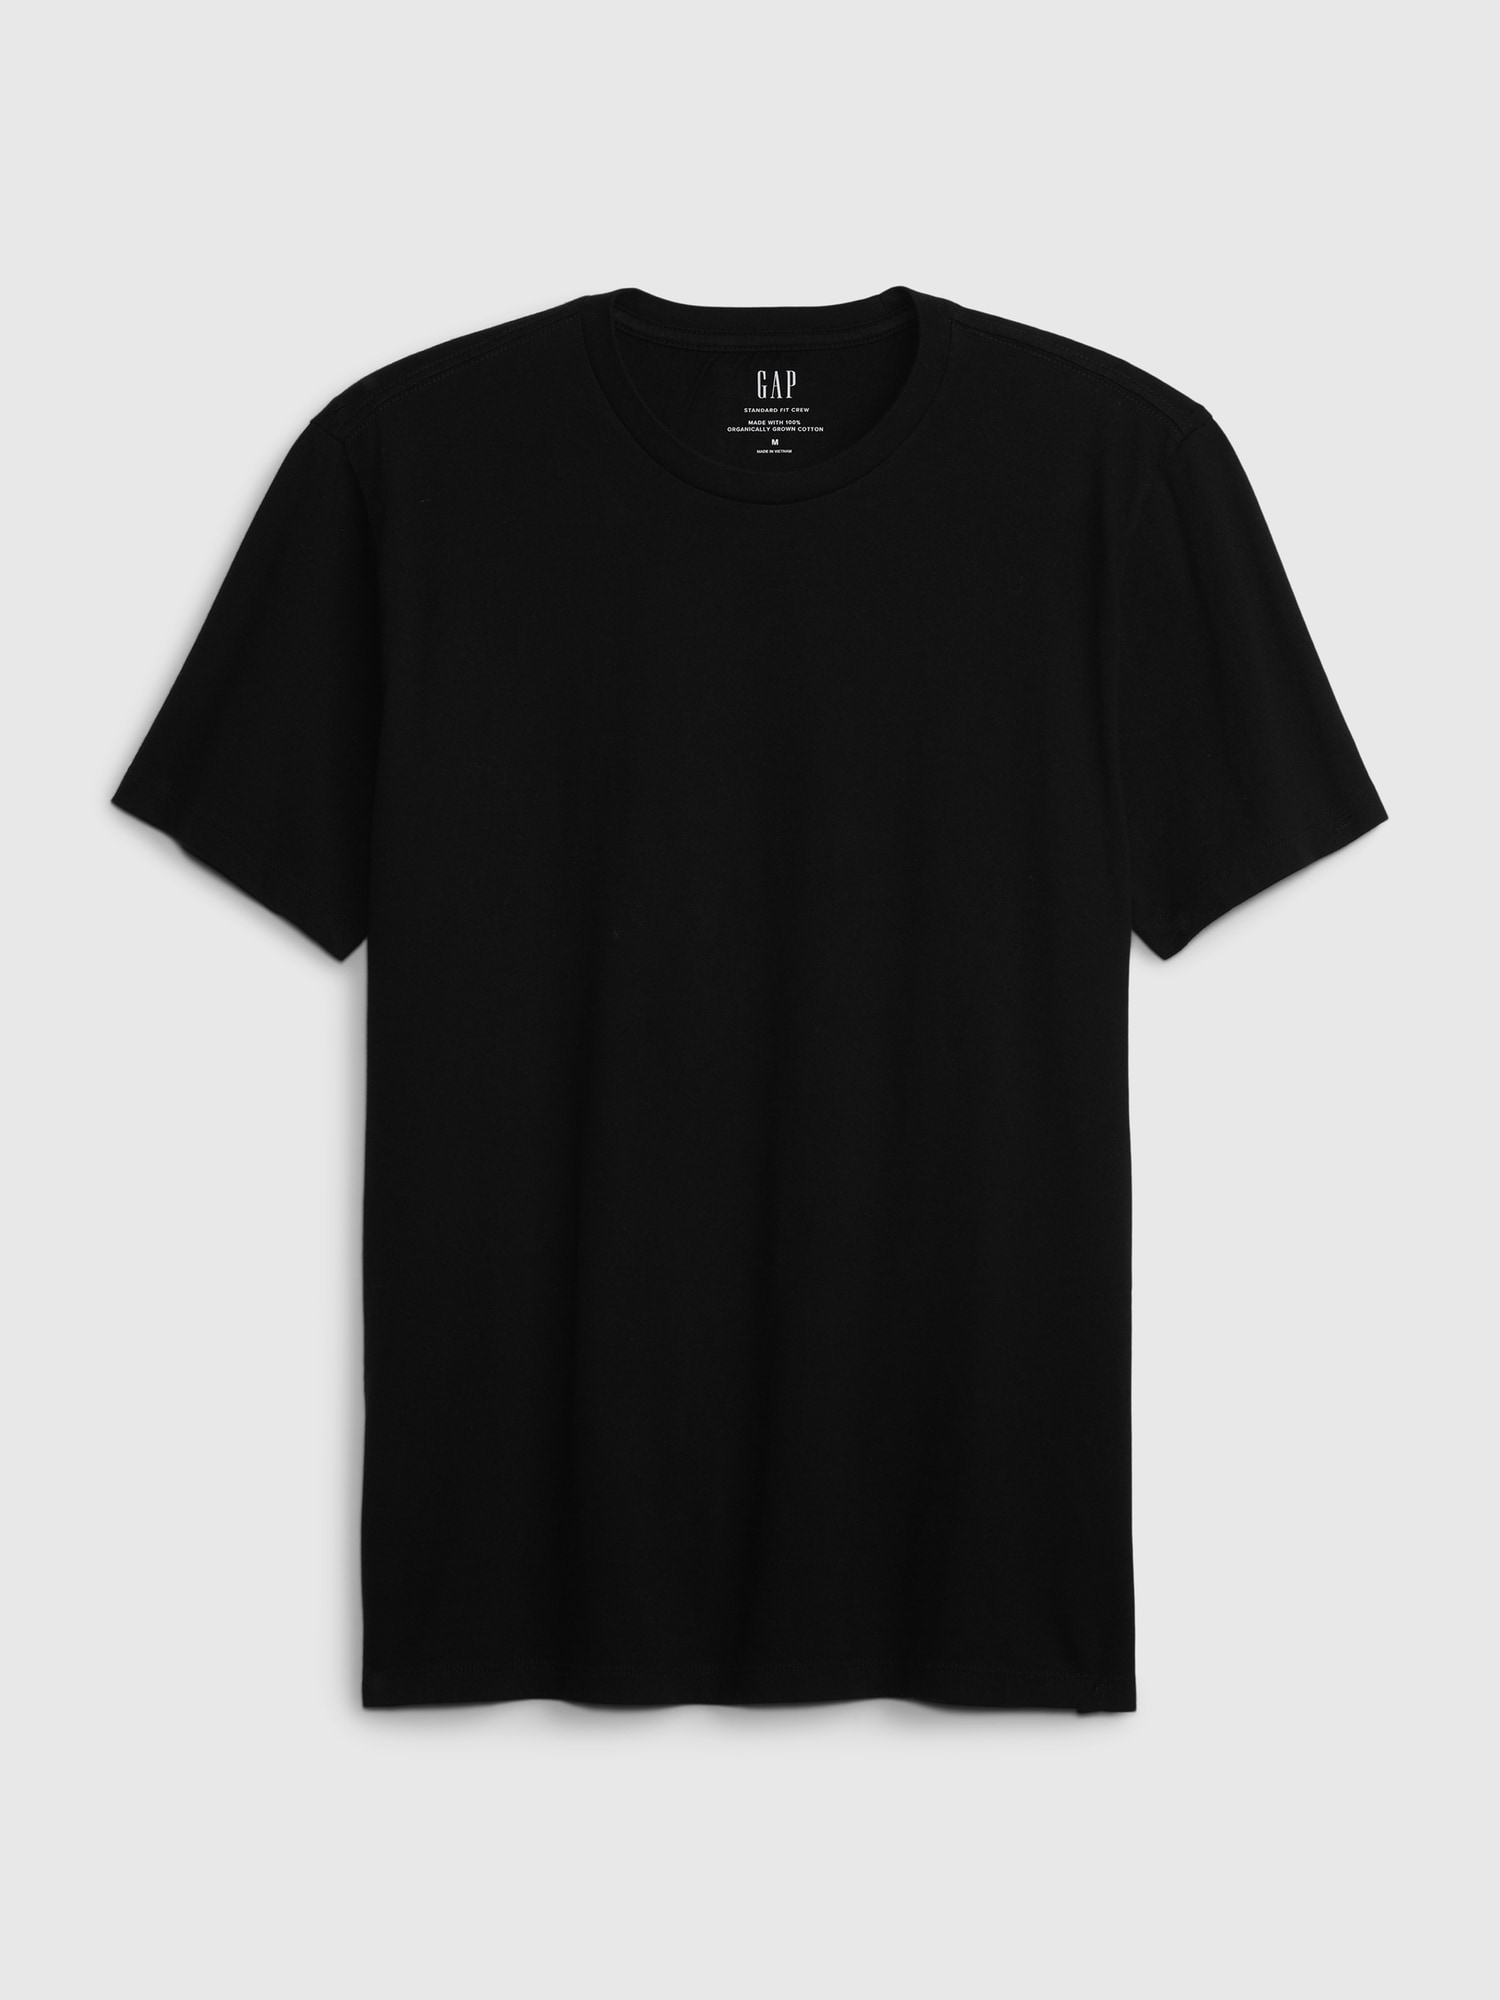 100% Cotton T-shirts